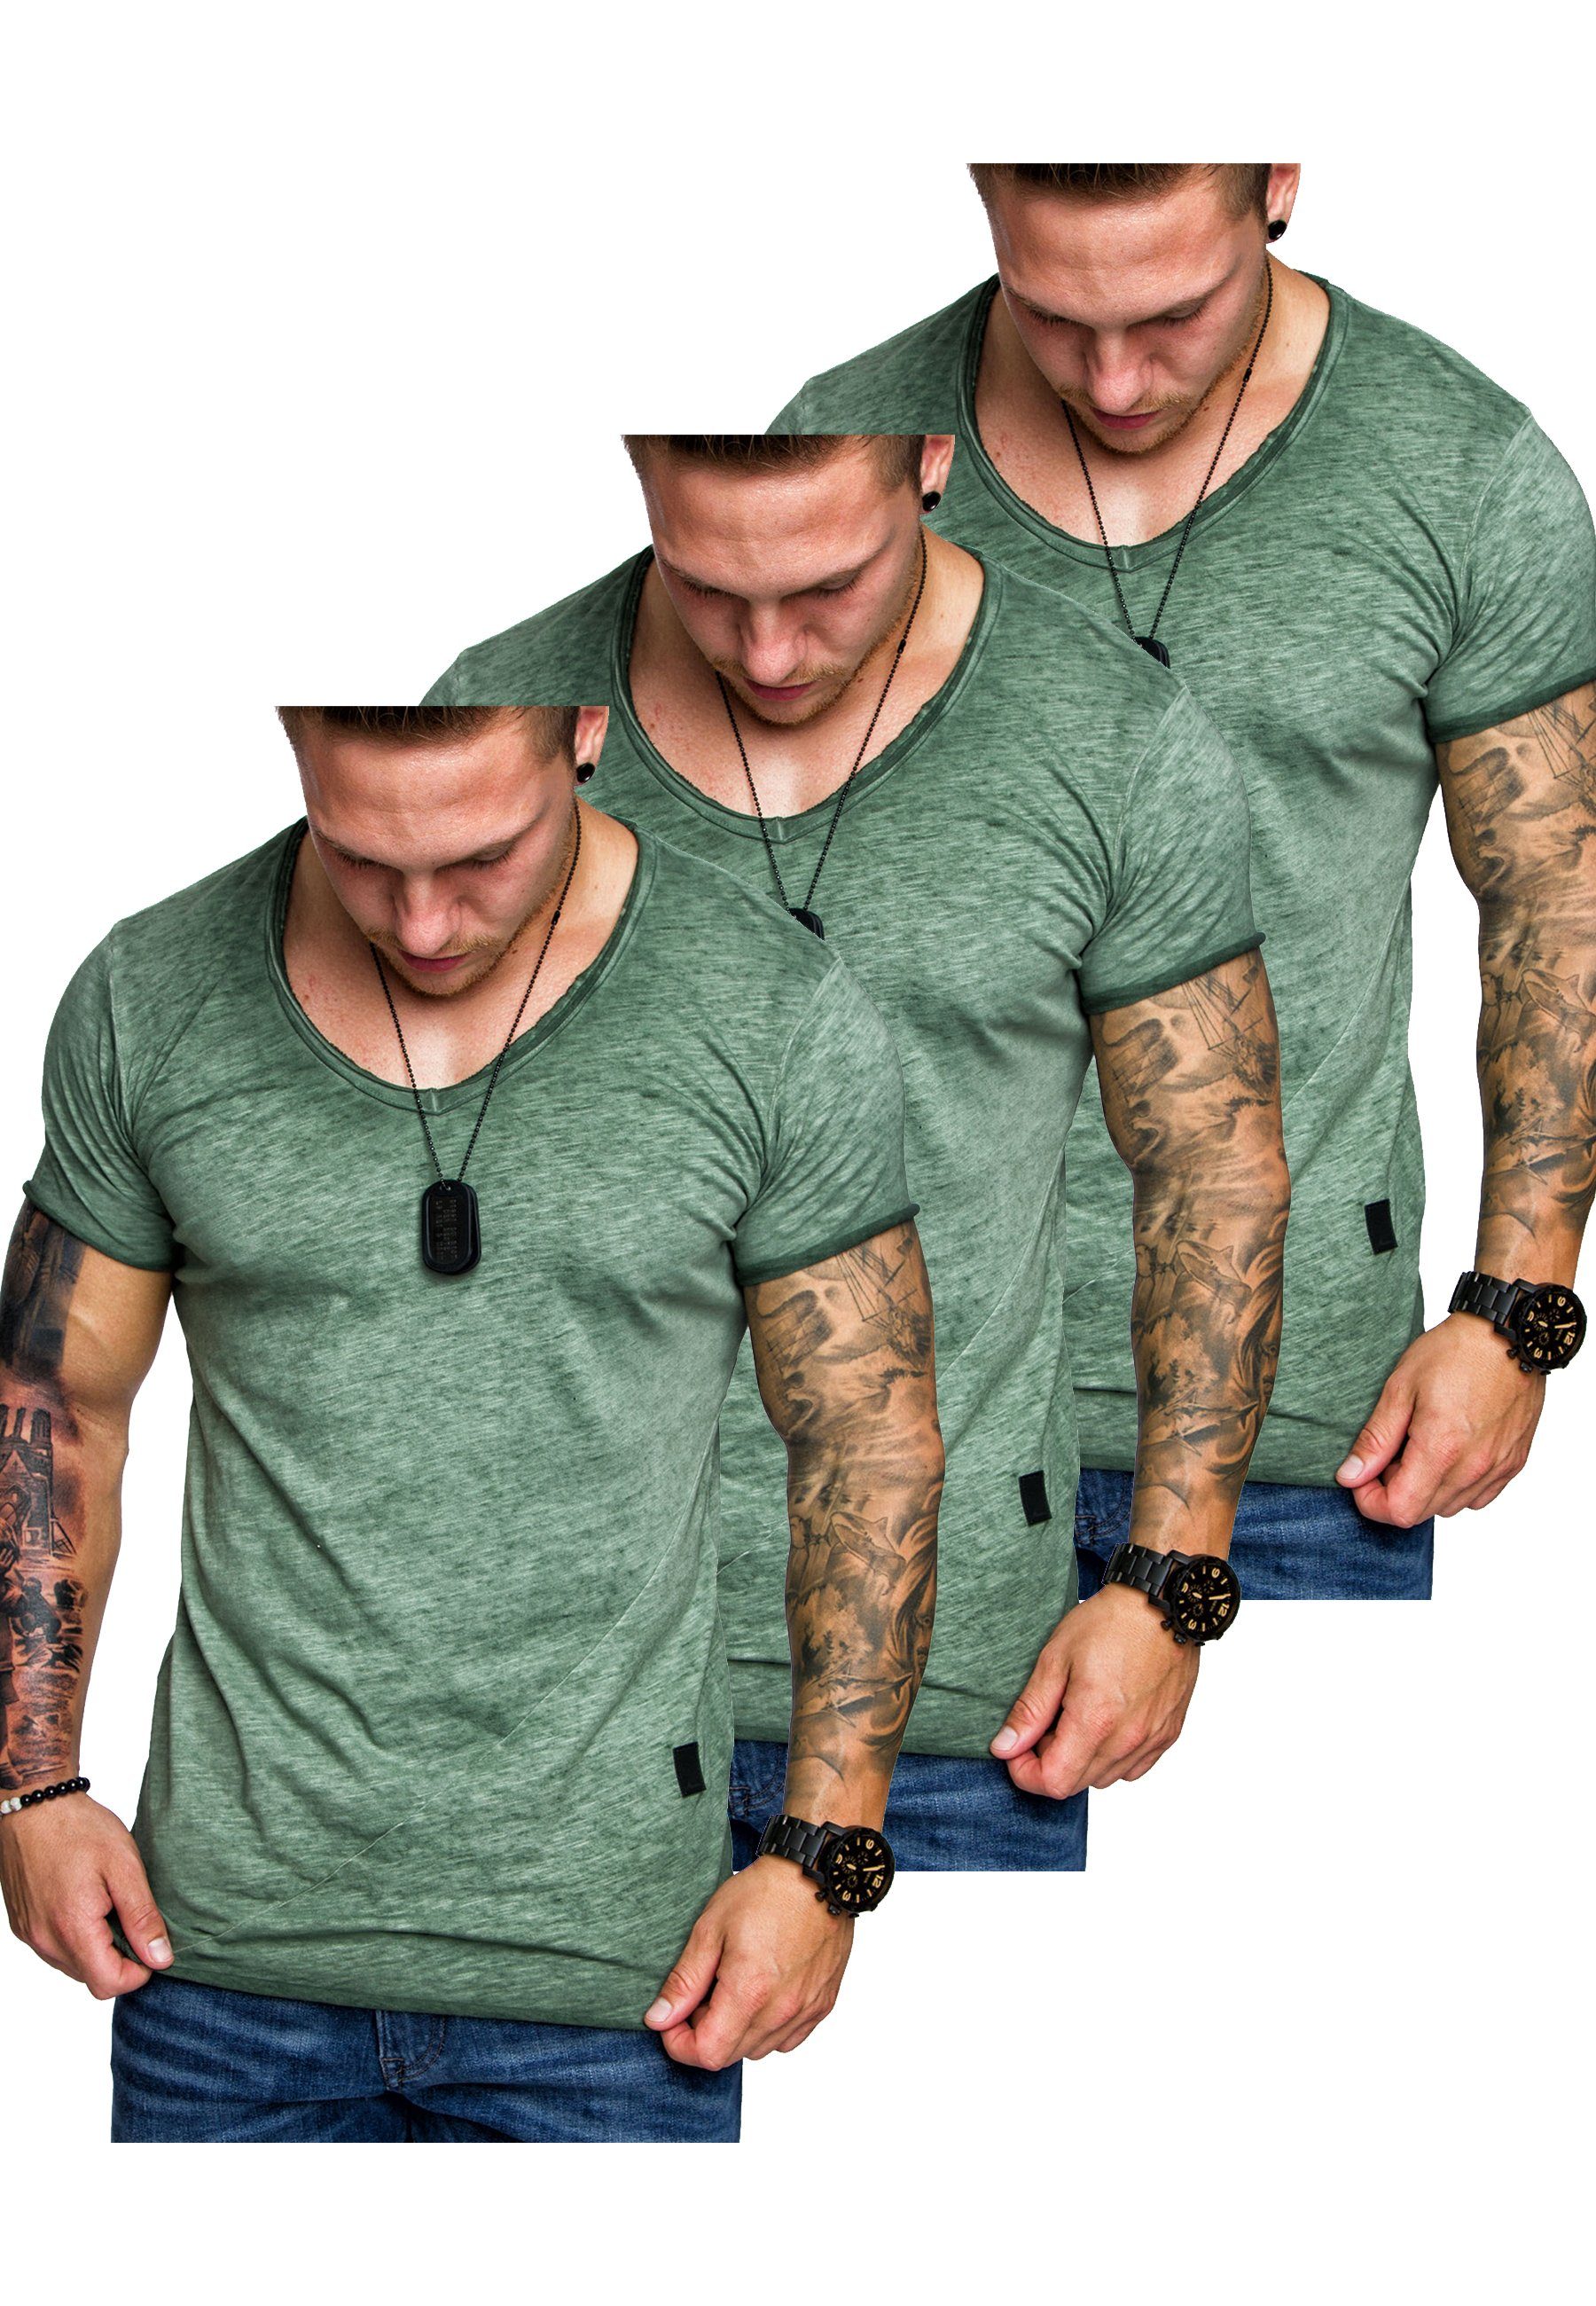 Herren NYC Amaci&Sons V-Ausschnitt T-Shirts T-Shirt mit 3. Oversize 3er-Pack Herren T-Shirt Khaki) (3er-Pack) Basic (3x